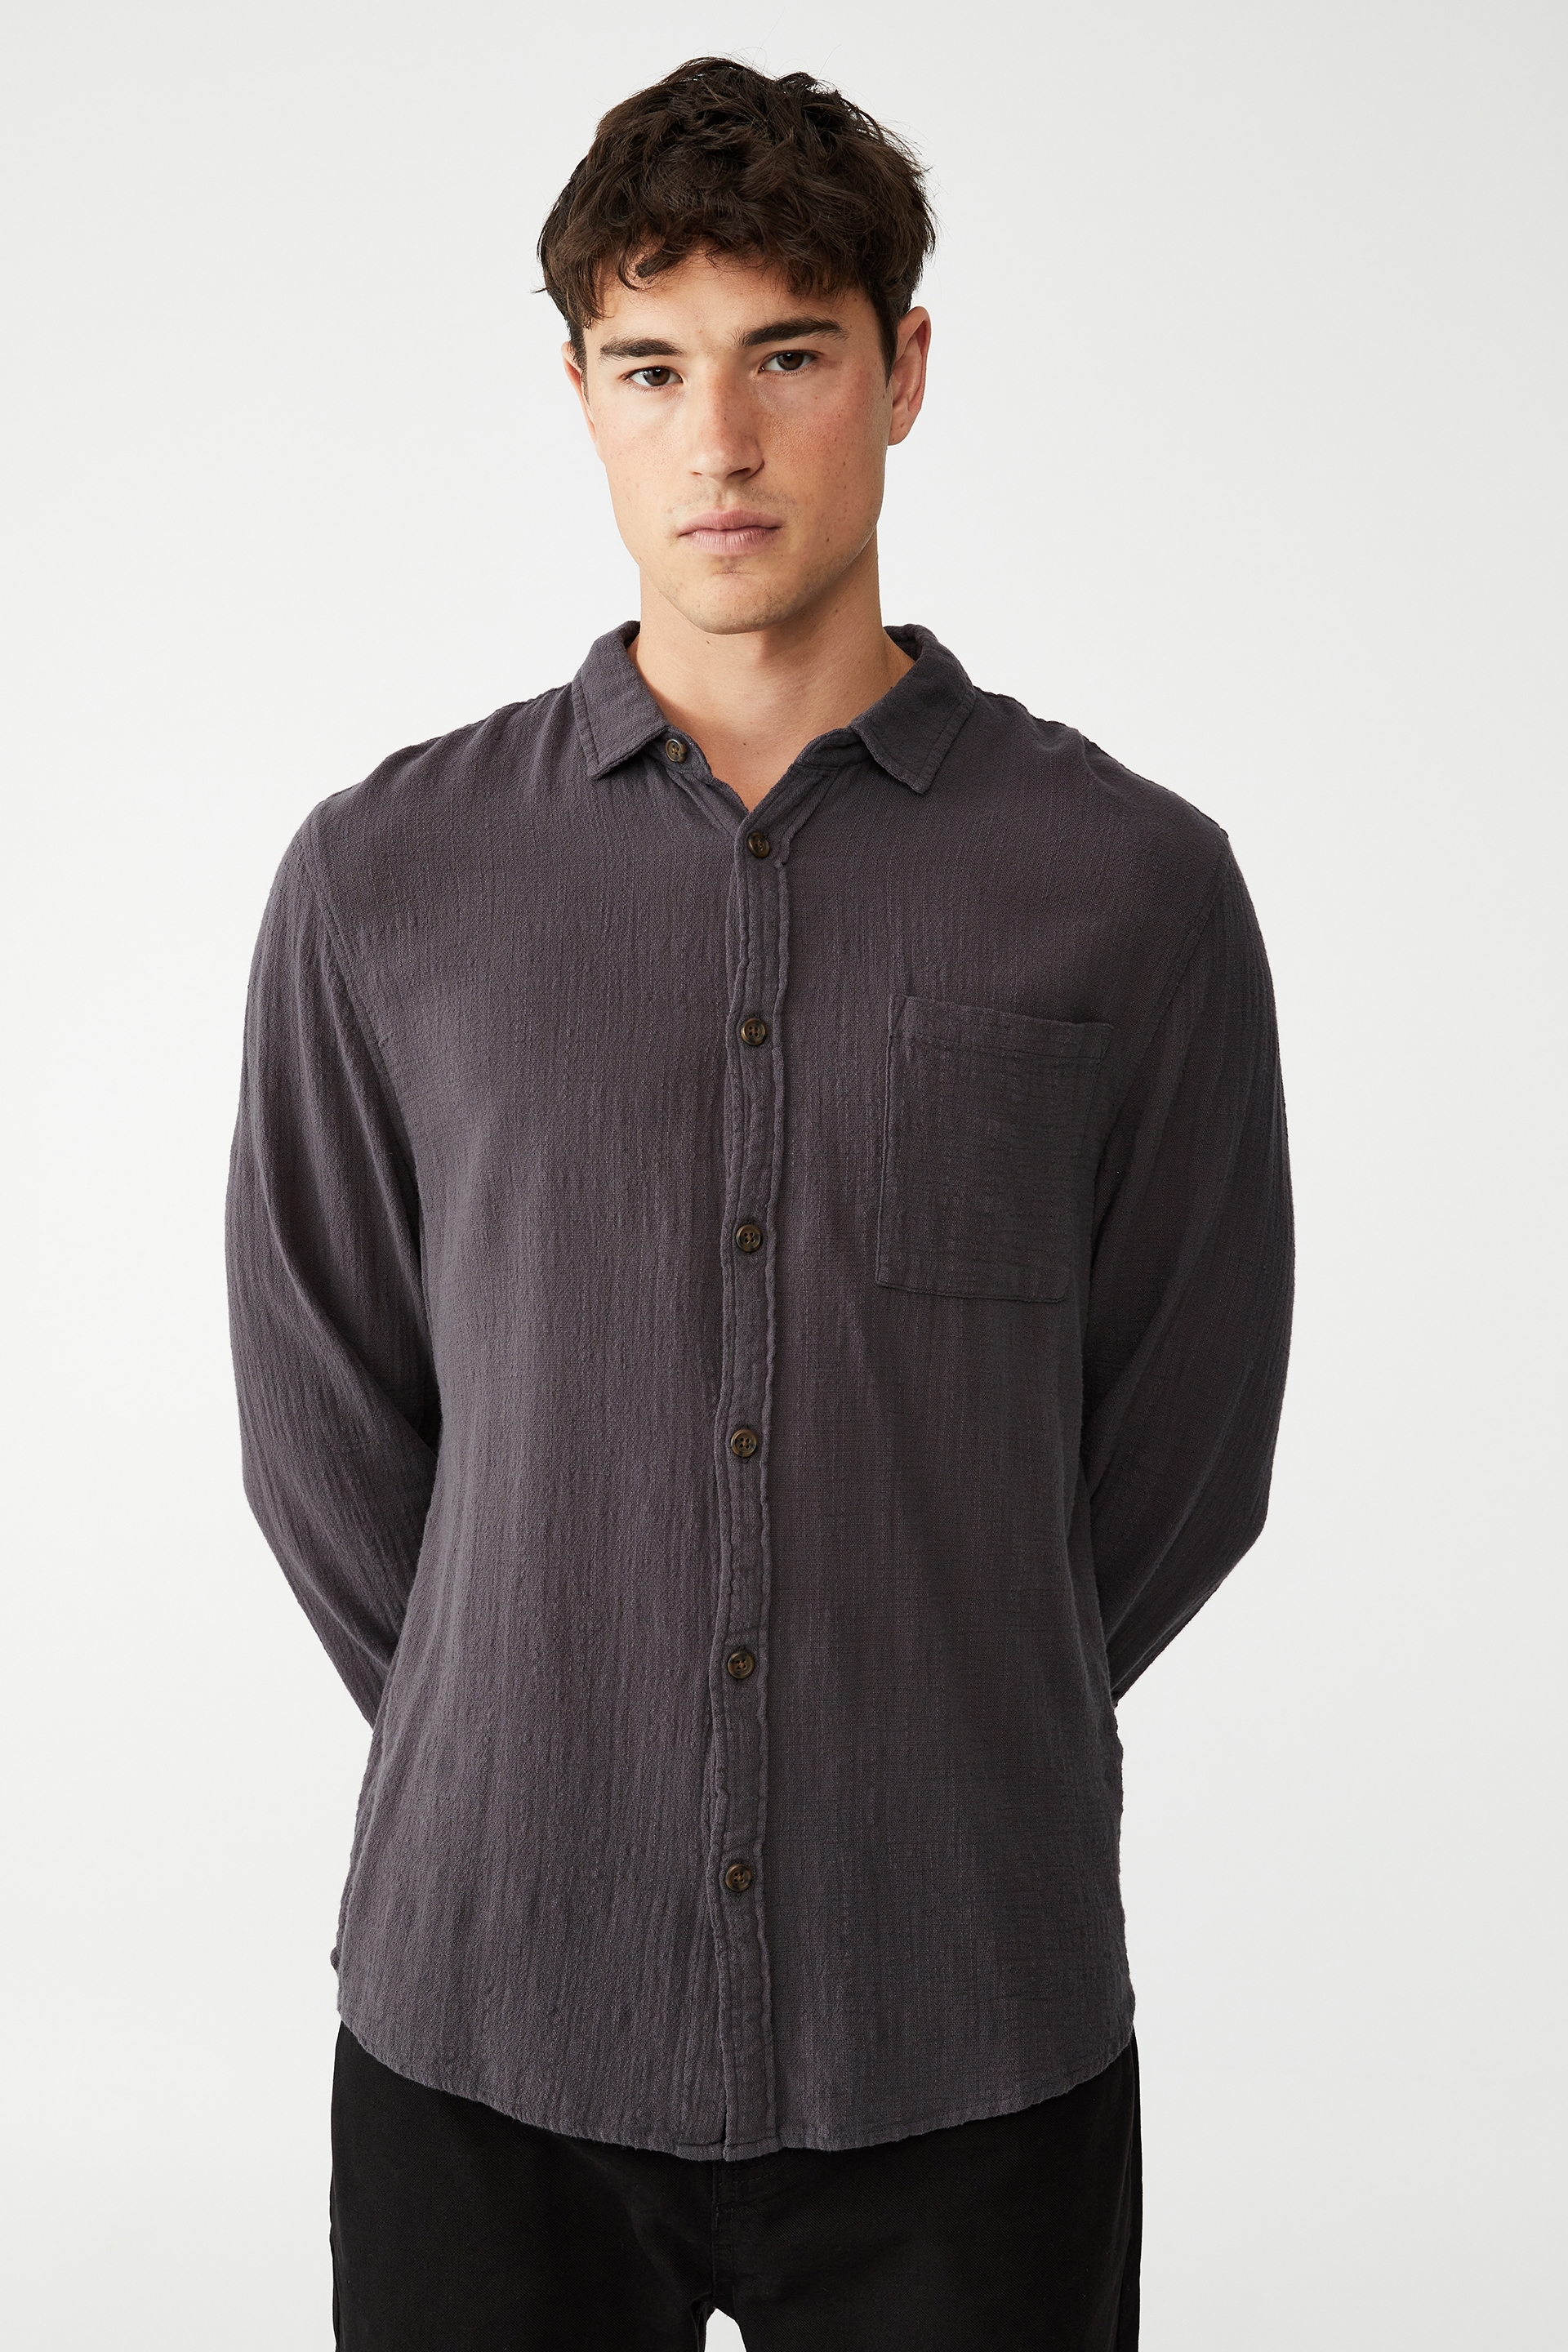 Cotton On Men - Camden Long Sleeve Shirt - Faded slate